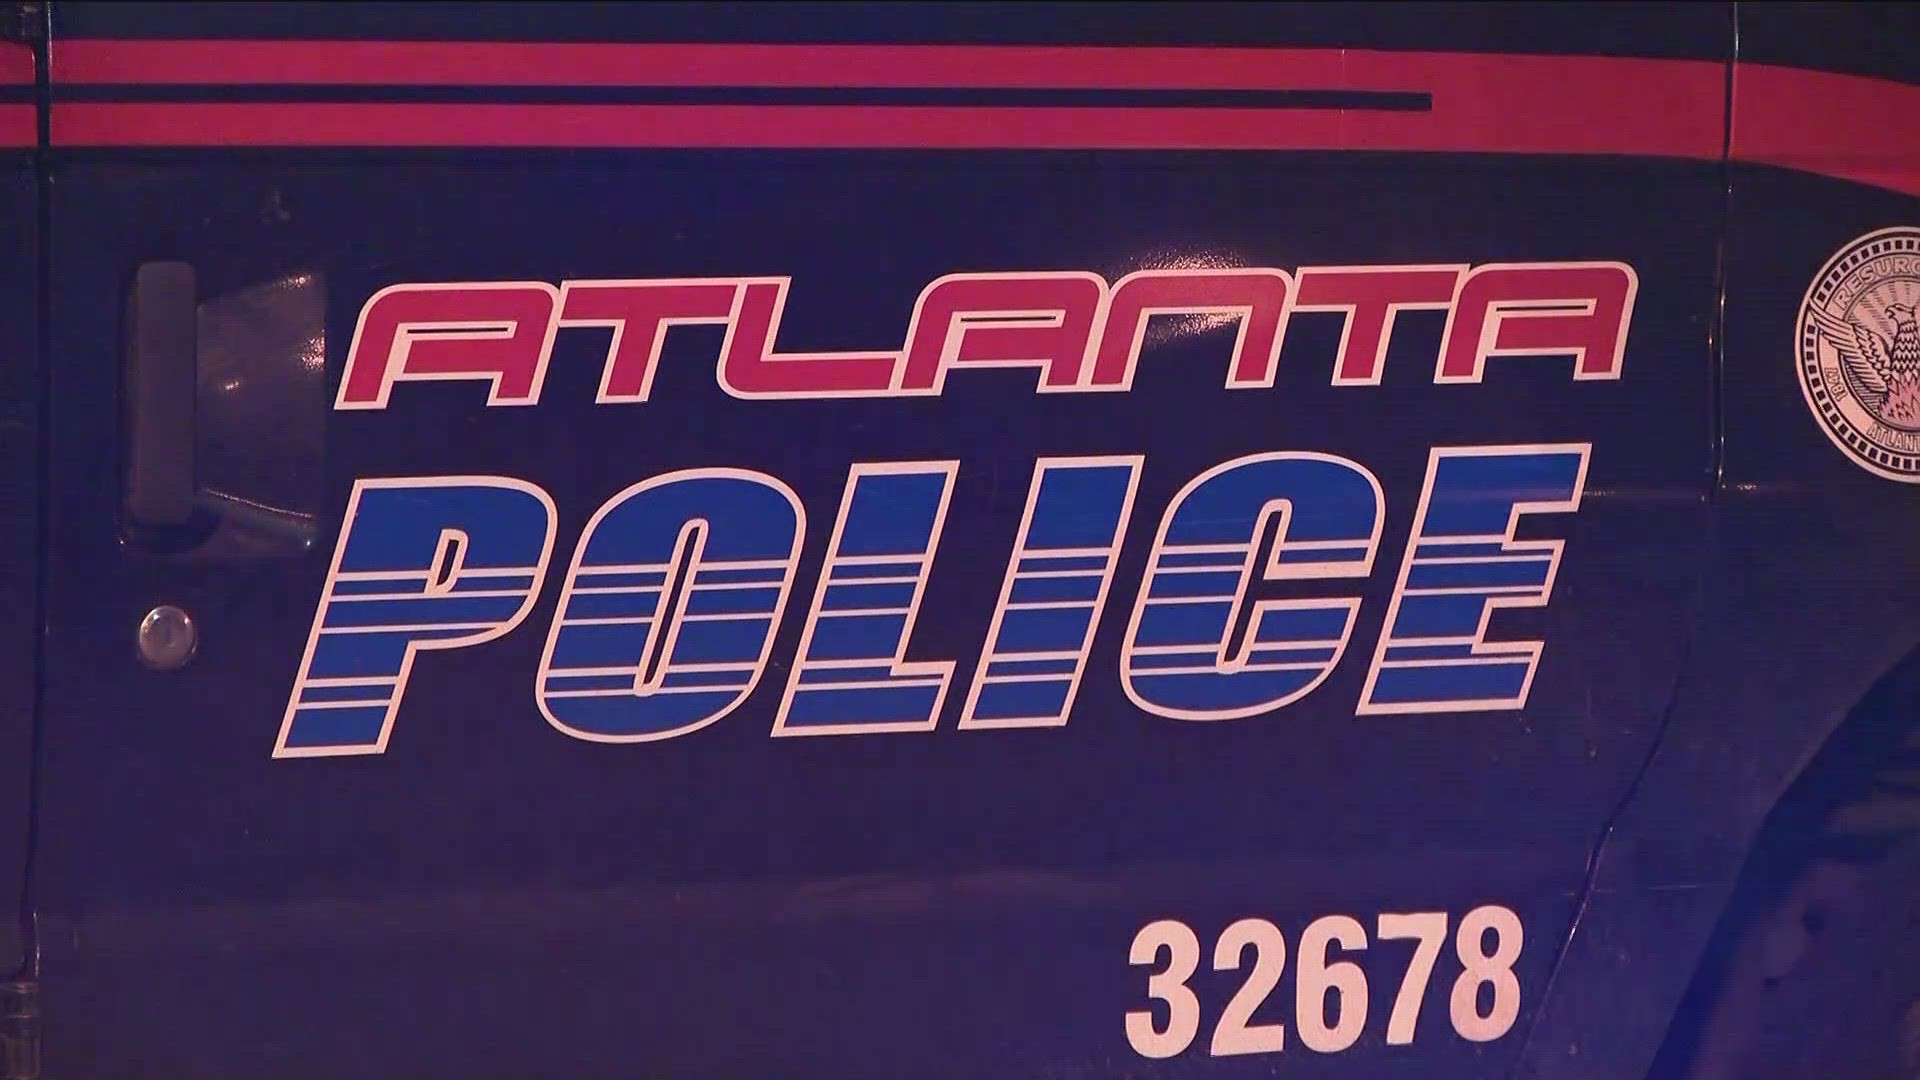 It happened just after midnight on Sunday morning, Atlanta Police said.